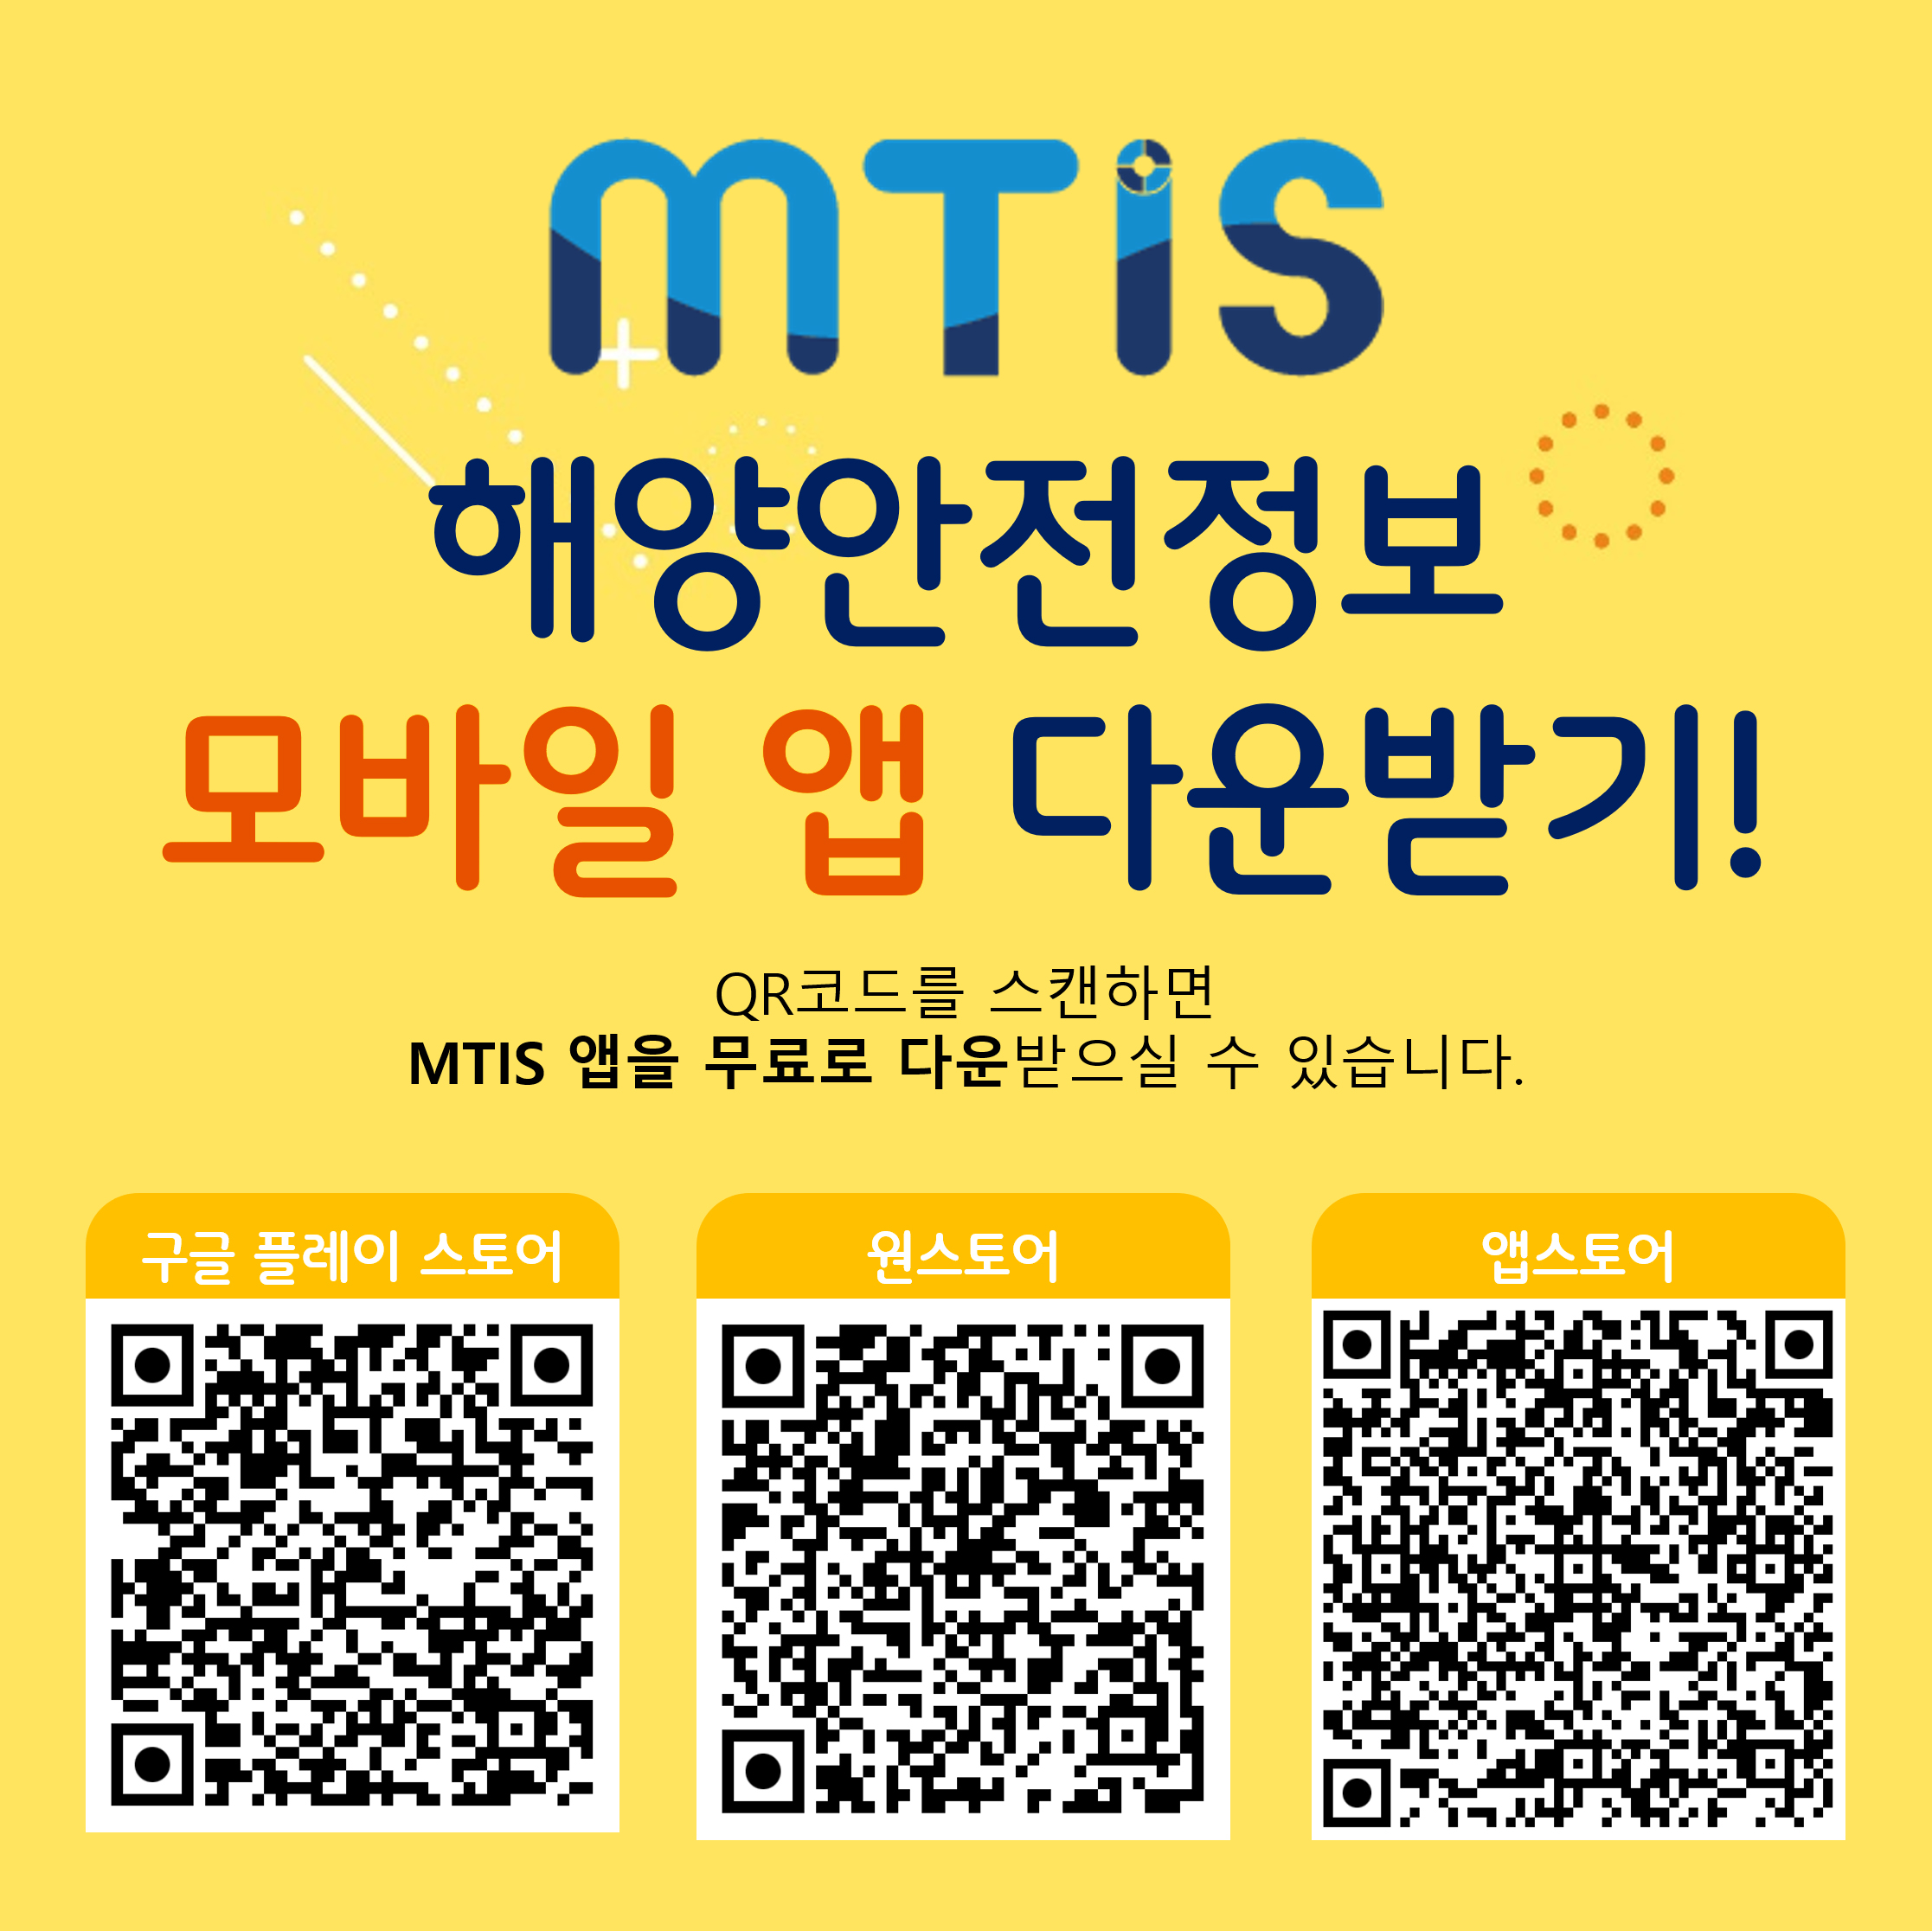 MTIS 해양안전정보 모바일 앱 다운받기!
QR코드를 스캔하면 MTIS 앱을 무료로 다운 받으실수 있습니다.
구글 플레이 스토어 : https://play.google.com/store/apps/details;jsessionid=BE7AF7A05D054552C66120B4939580E4?id=kr.or.komsa.mtis
원스토어 : https://m.onestore.co.kr/mobilepoc/apps/appsDetail.omp?prodId=0000771271
앱스토어 : https://apps.apple.com/kr/app/%ED%95%B4%EC%96%91%EA%B5%90%ED%86%B5%EC%95%88%EC%A0%84%EC%A0%95%EB%B3%B4/id6462842483